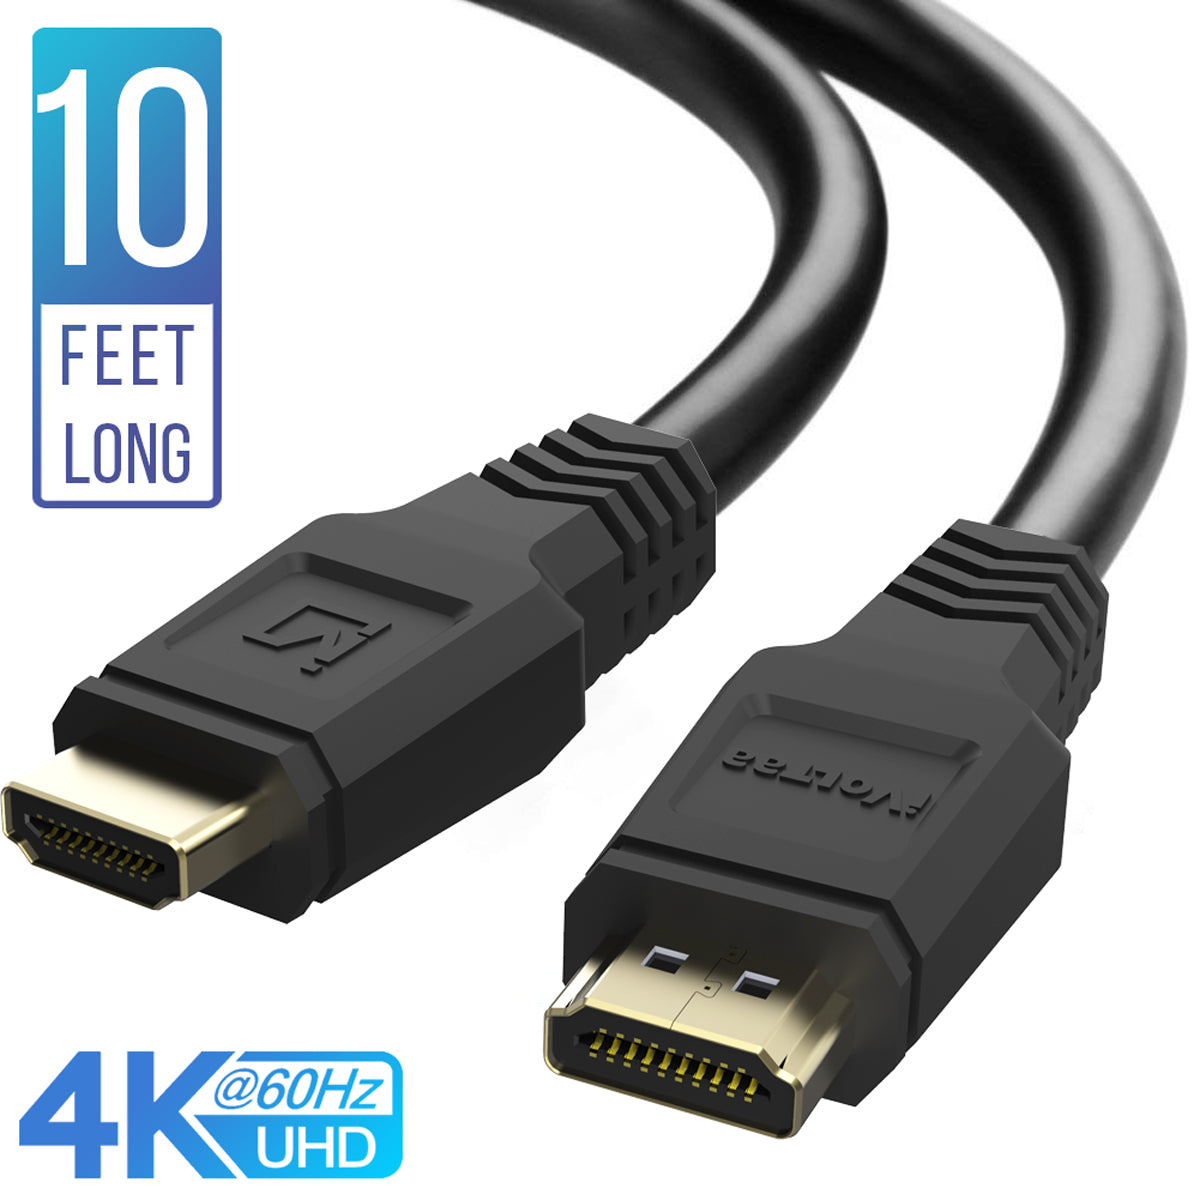 iVoltaa High Speed 4K 60 Hz HDMI 2.0 Cable